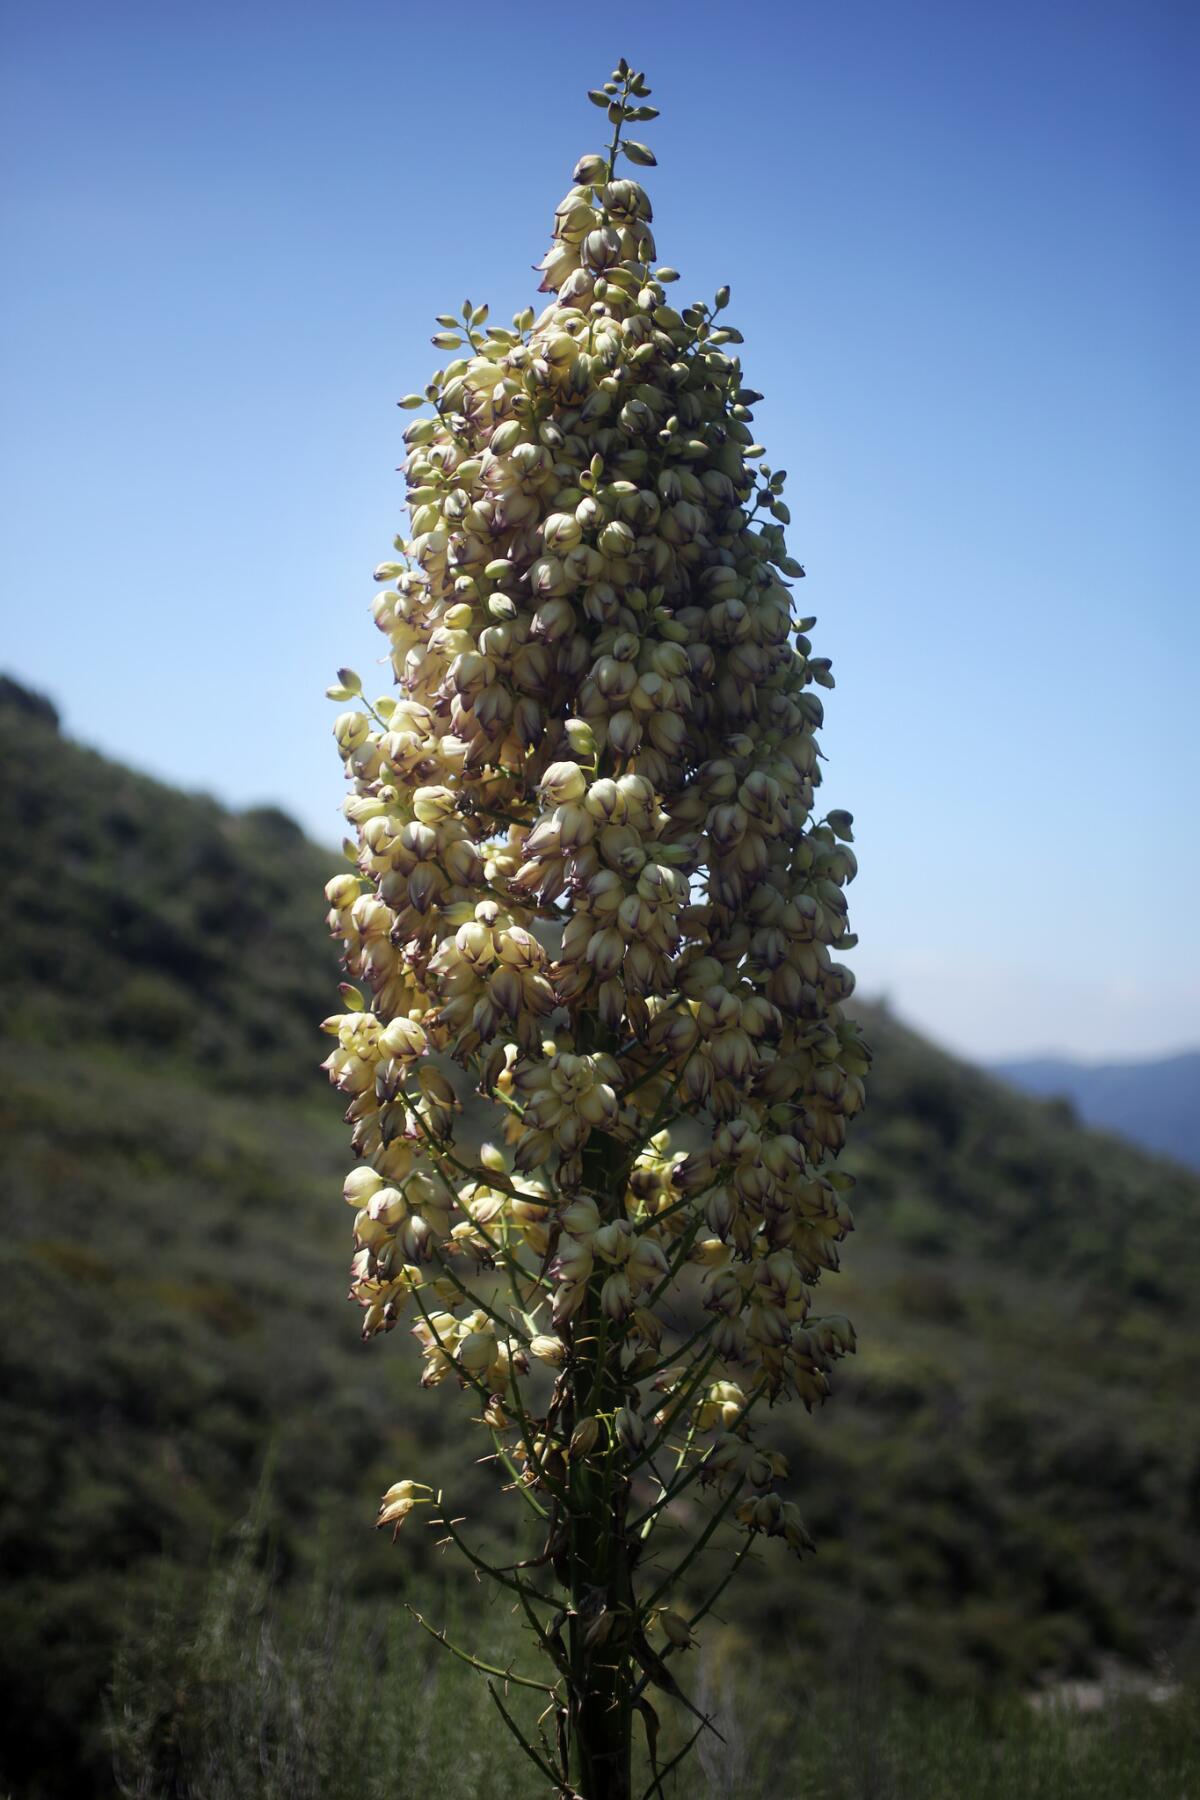 A yucca in bloom at the hillside park in La Crescenta.